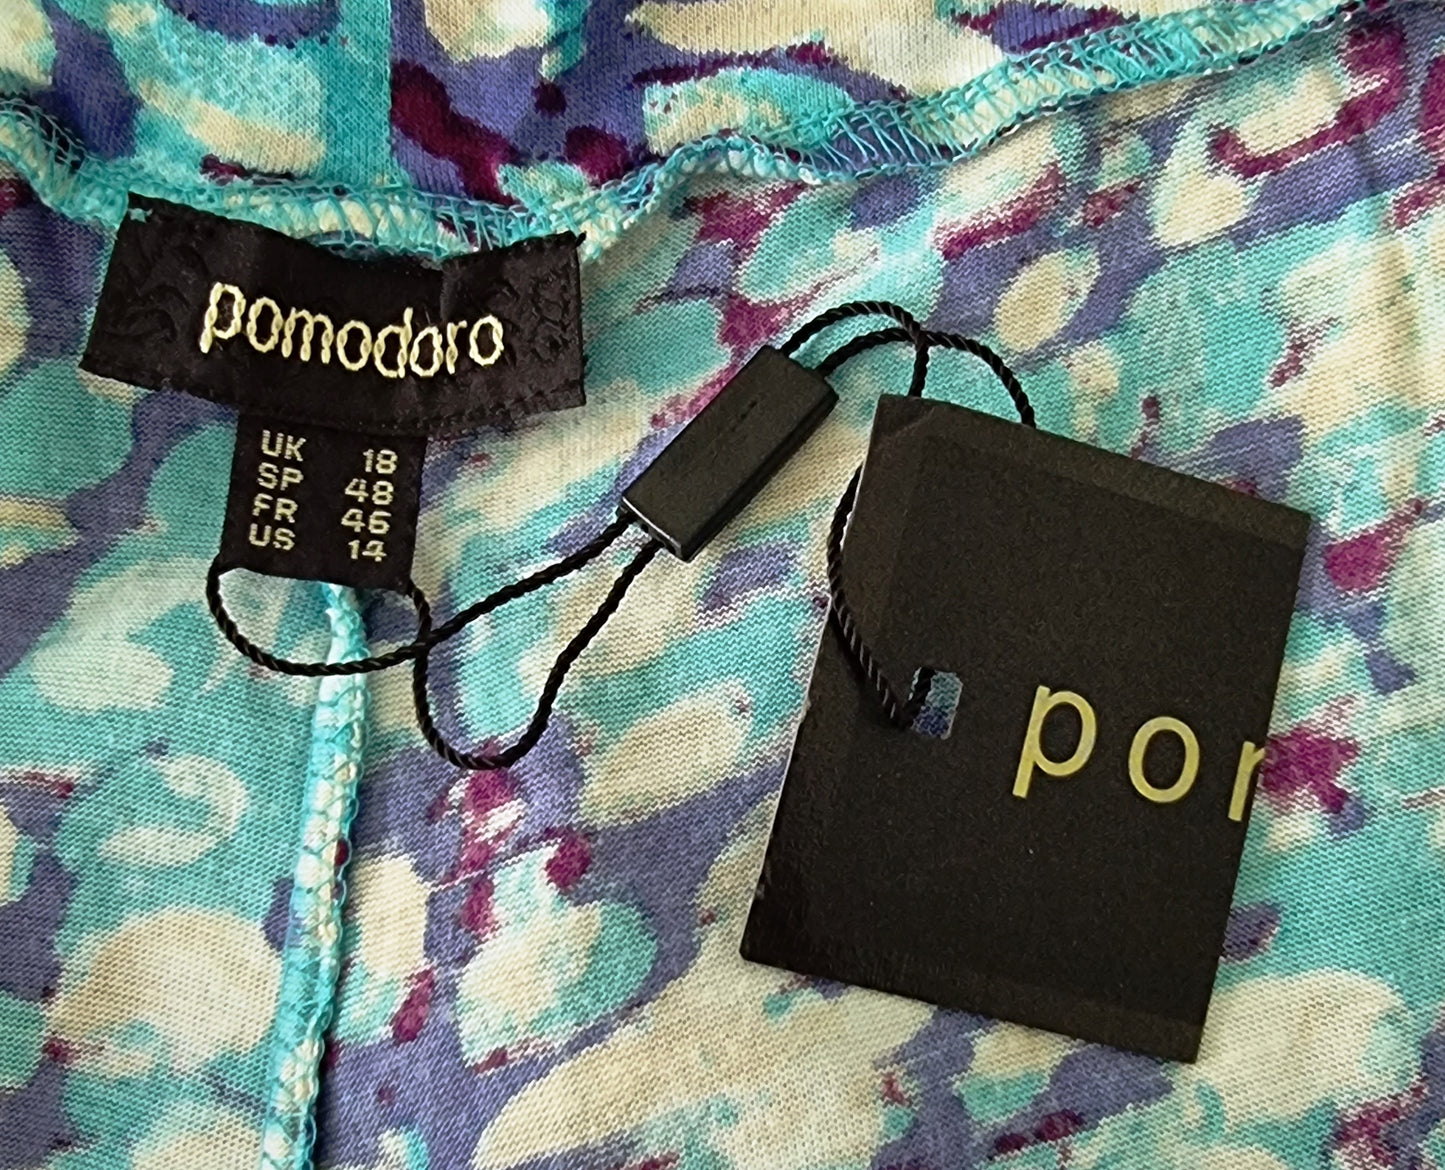 Pomodoro Aqua, Summer Casual Ankle Length Pants UK 18 US 14 EU 46 BNWT RRP £49.95 Timeless Fashions